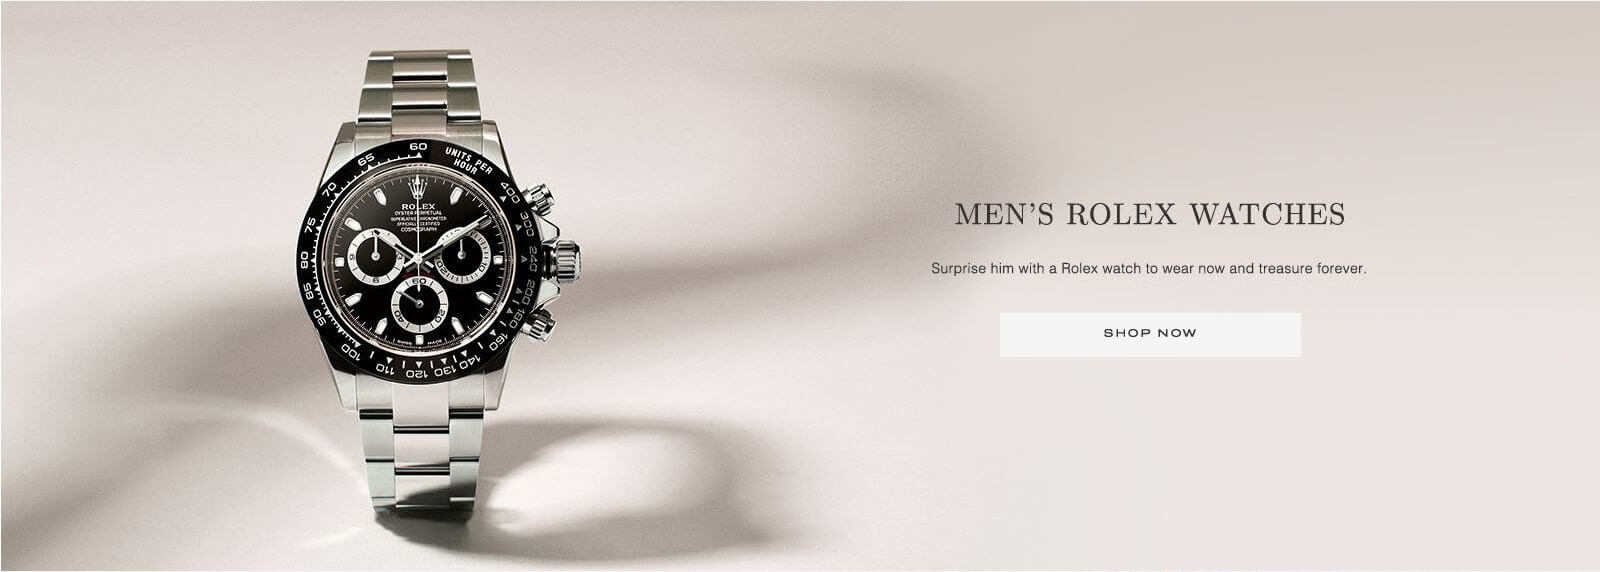 Men's Rolex Watches